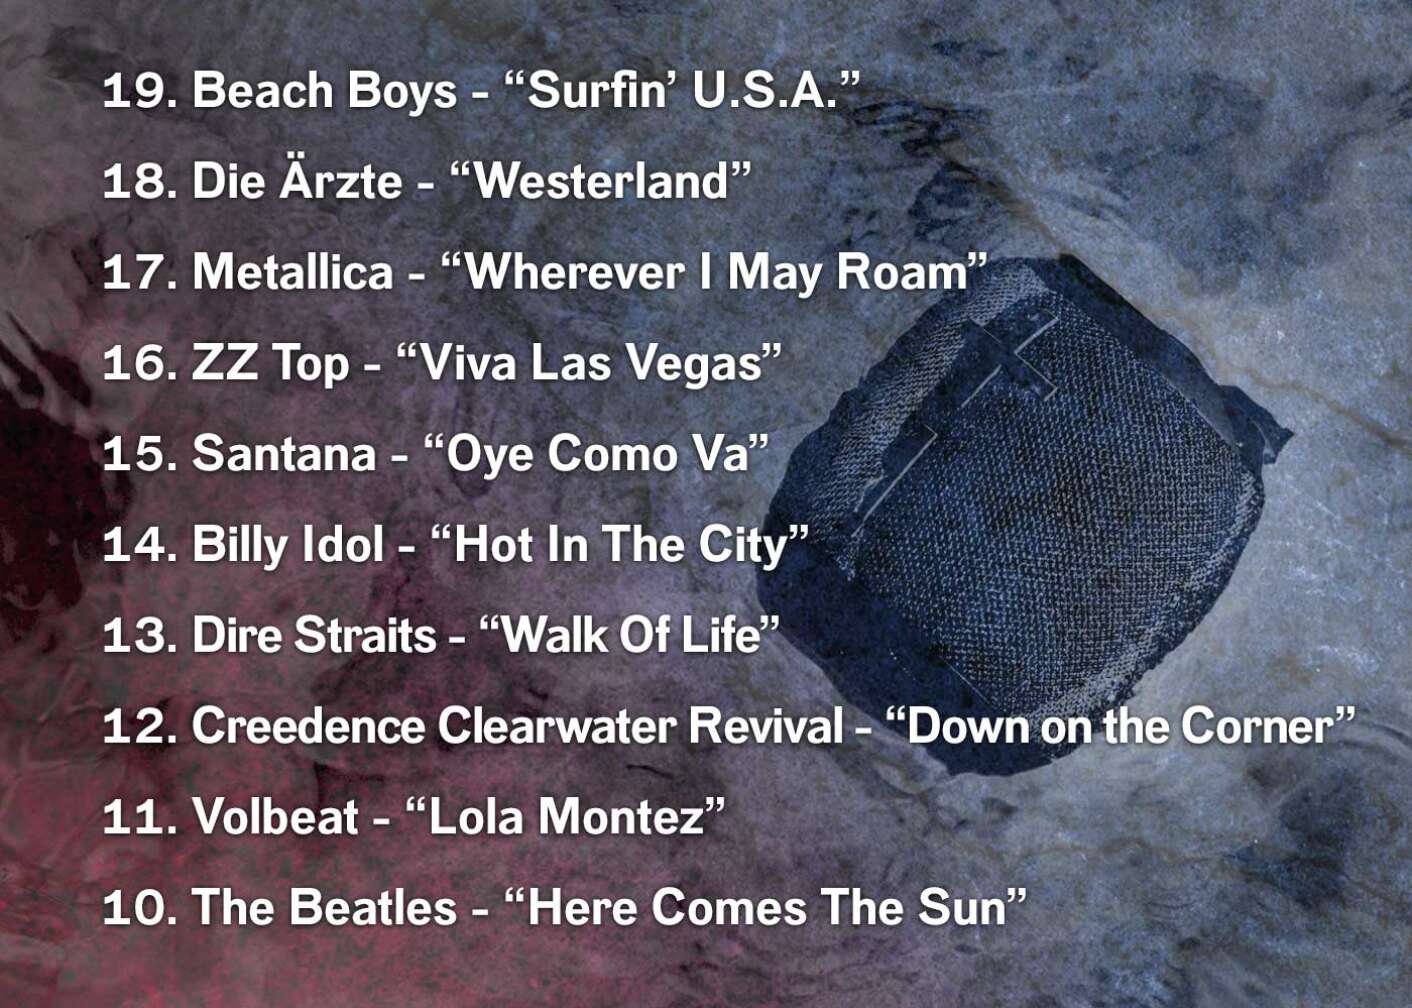 19. Beach Boys - “Surfin’ U.S.A.” 18. Die Ärzte - “Westerland” 17. Metallica - “Wherever I May Roam” 16. ZZ Top - “Viva Las Vegas” 15. Santana - “Oye Como Va” 14. Billy Idol - “Hot In The City” 13. Dire Straits - “Walk Of Life” 12. Creedence Clearwater Revival - “Down on the Corner” 11. Volbeat - “Lola Montez” 10. The Beatles - “Here Comes The Sun”